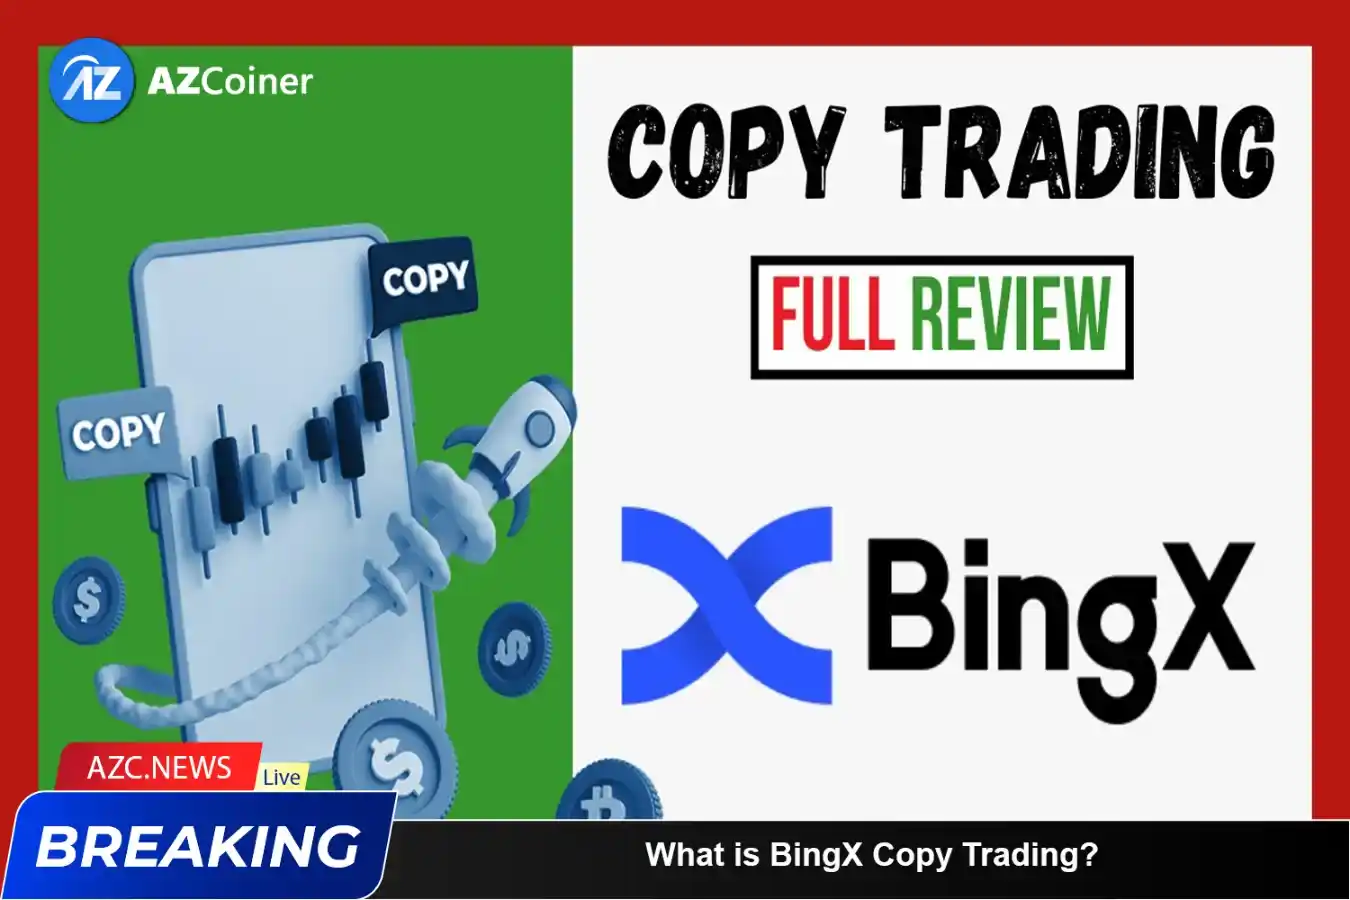 What Is Bingx Copy Trading? A Guide To Copy Trading On Bingx_65d5d06e95b78.webp